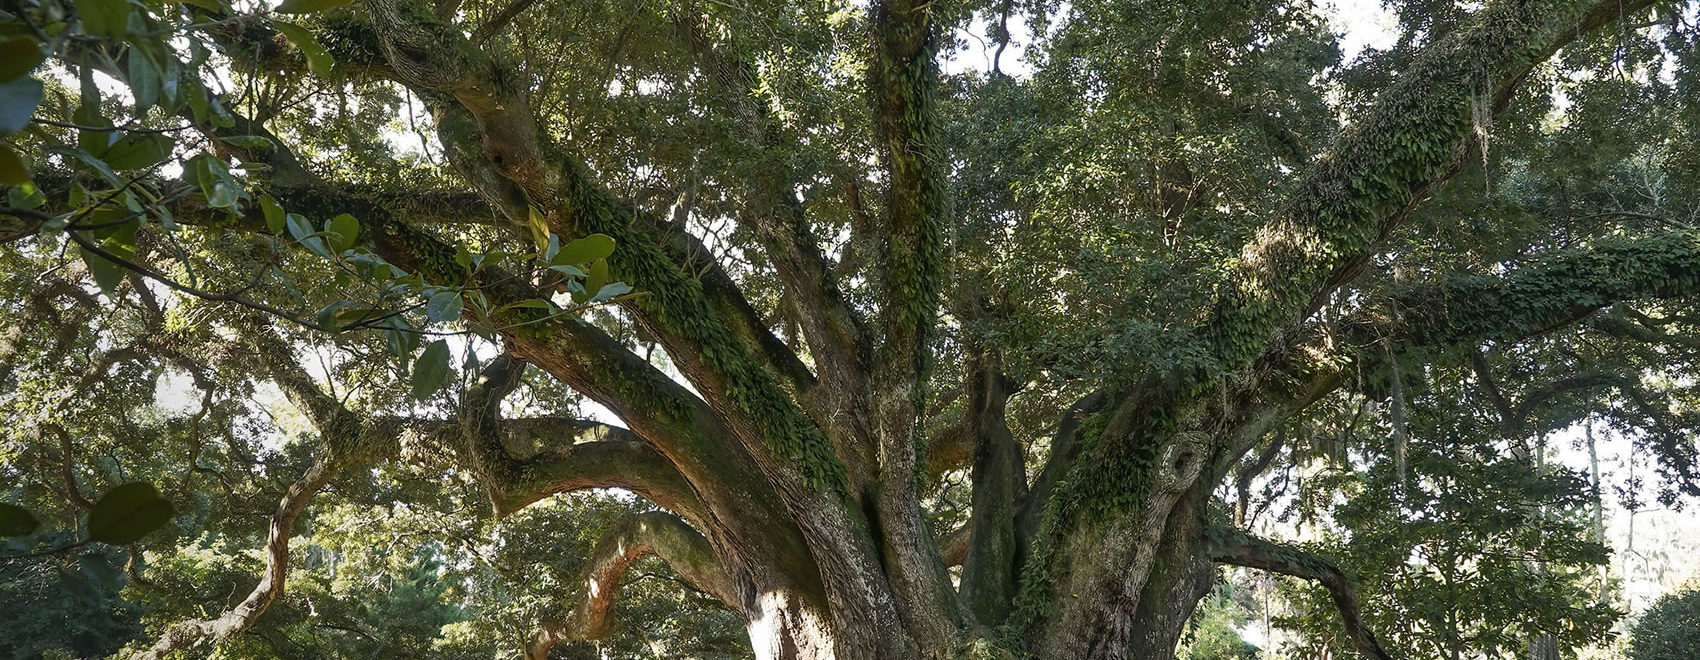 giant Live Oak In Louisiana